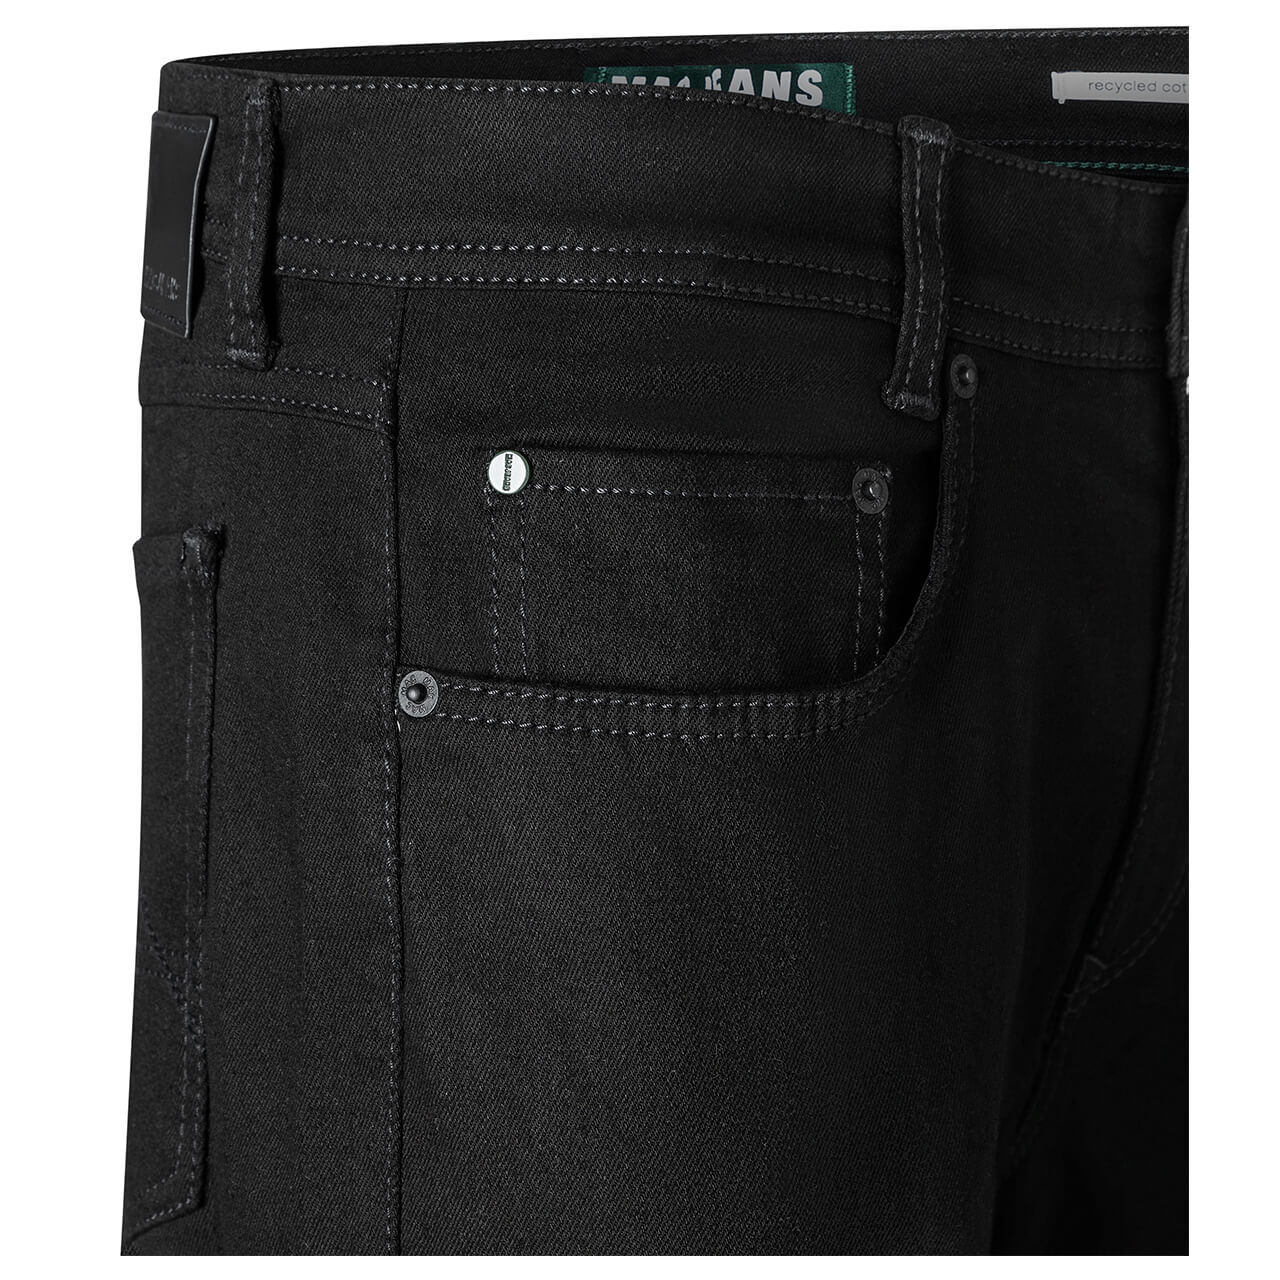 MAC Arne Jeans black black